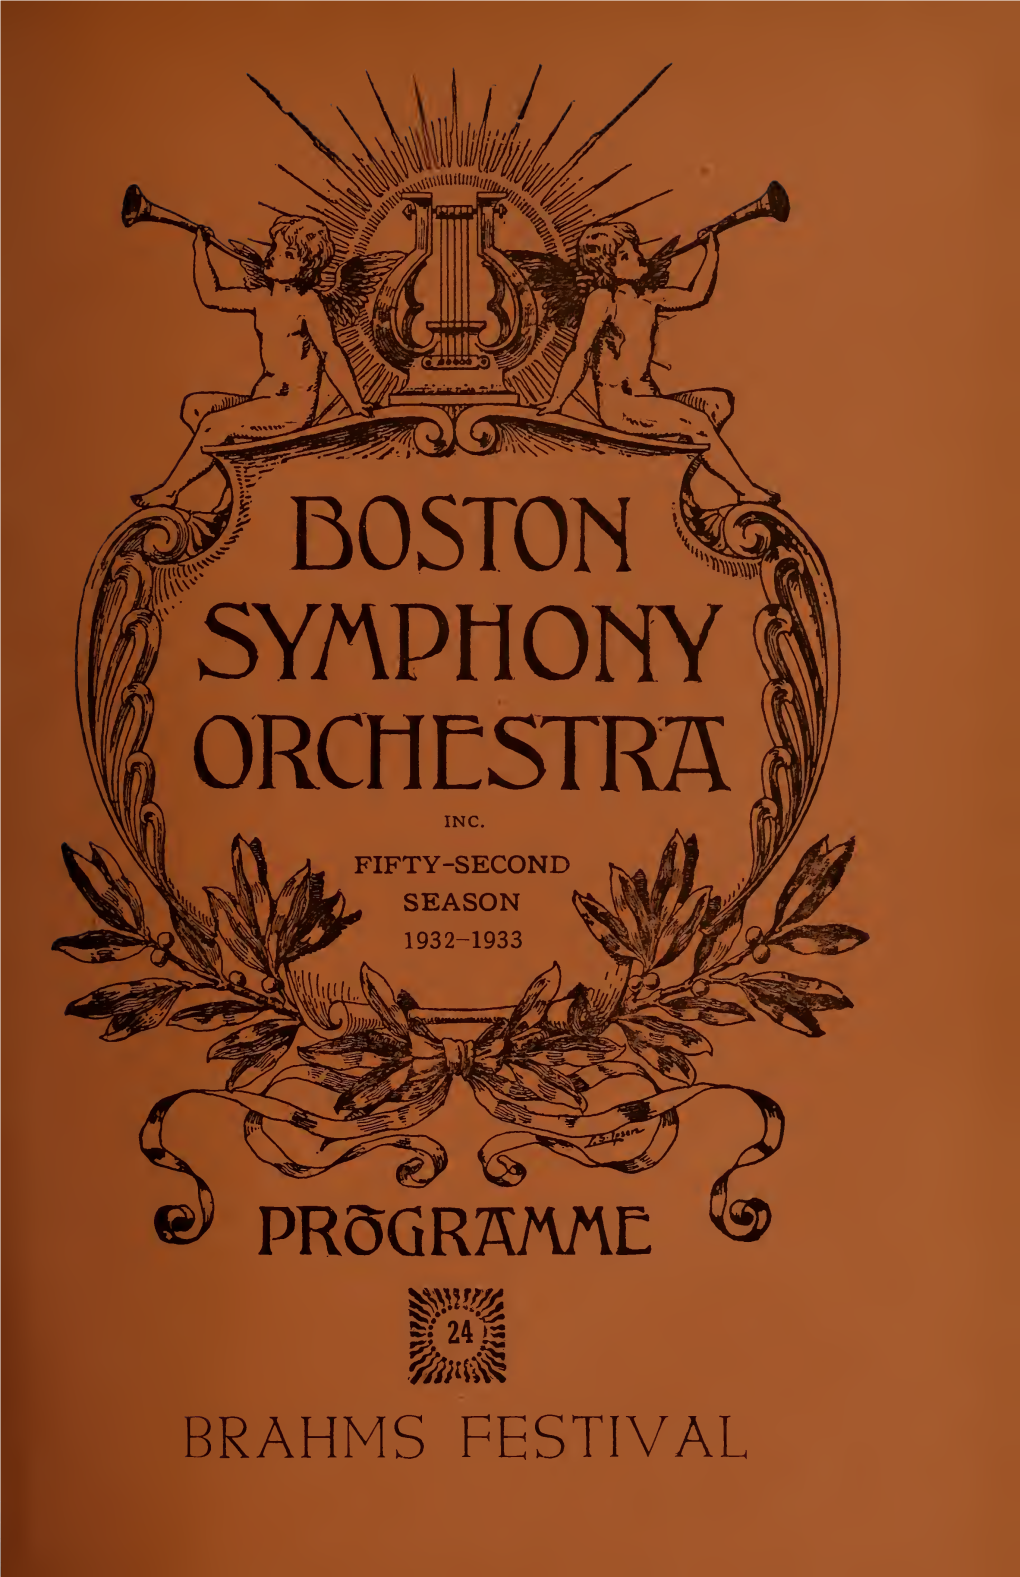 Boston Symphony Orchestra Concert Programs, Season 52,1932-1933